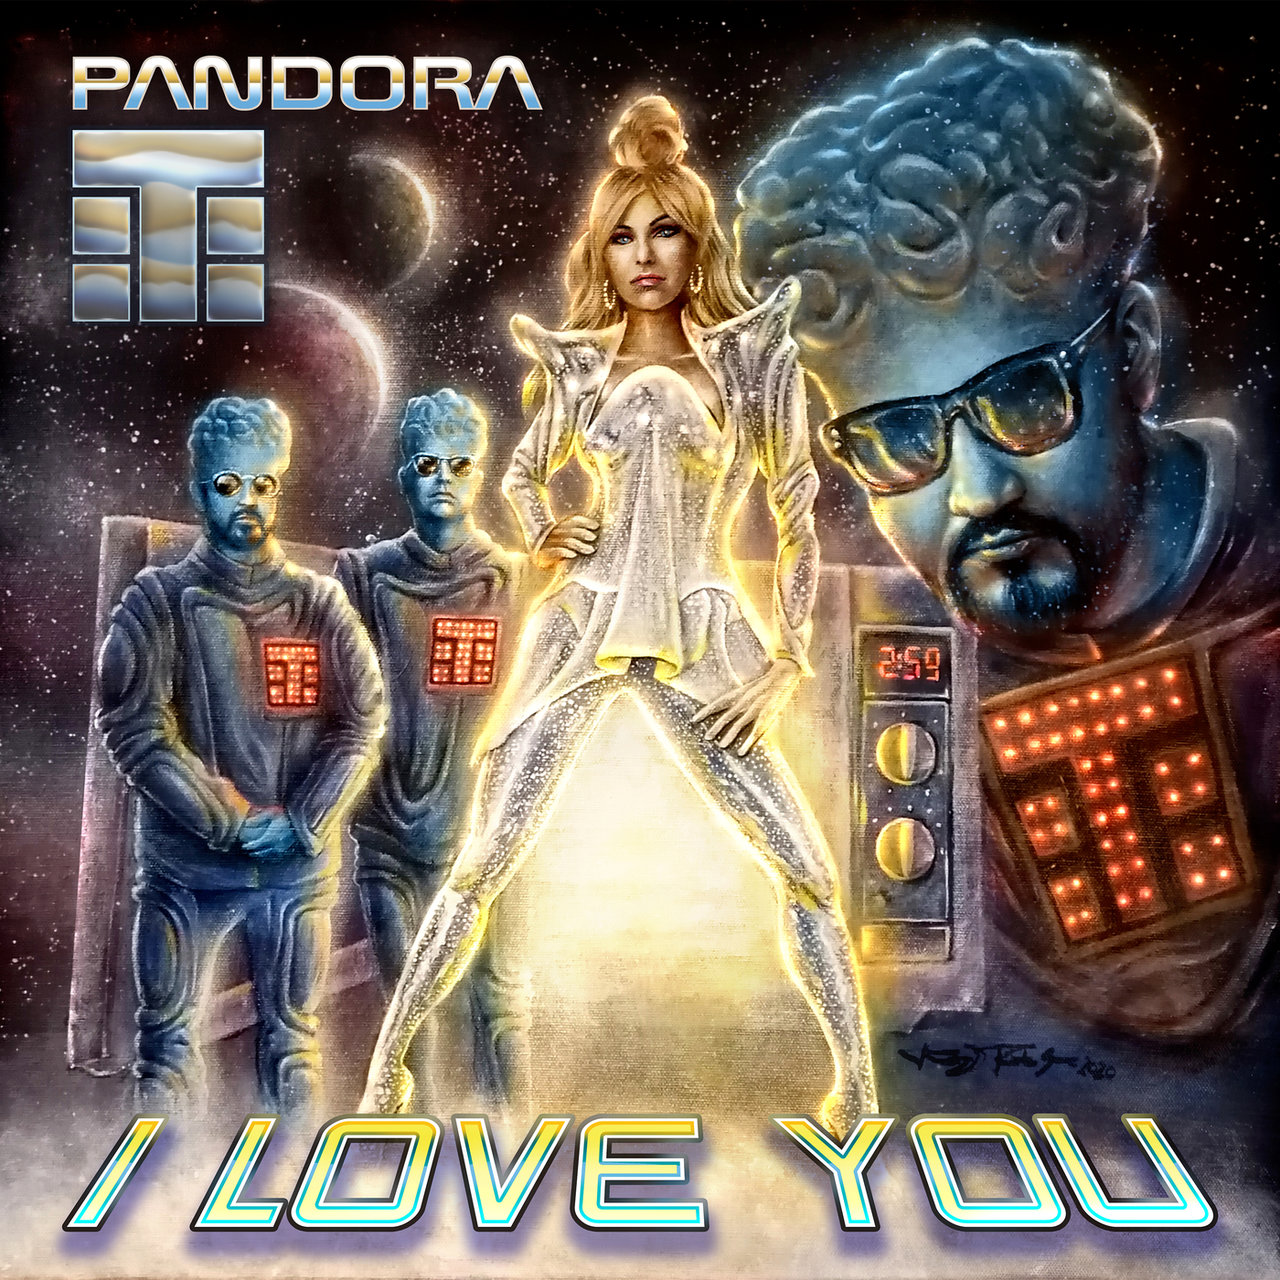 Teflon Brothers & Pandora I Love You cover artwork